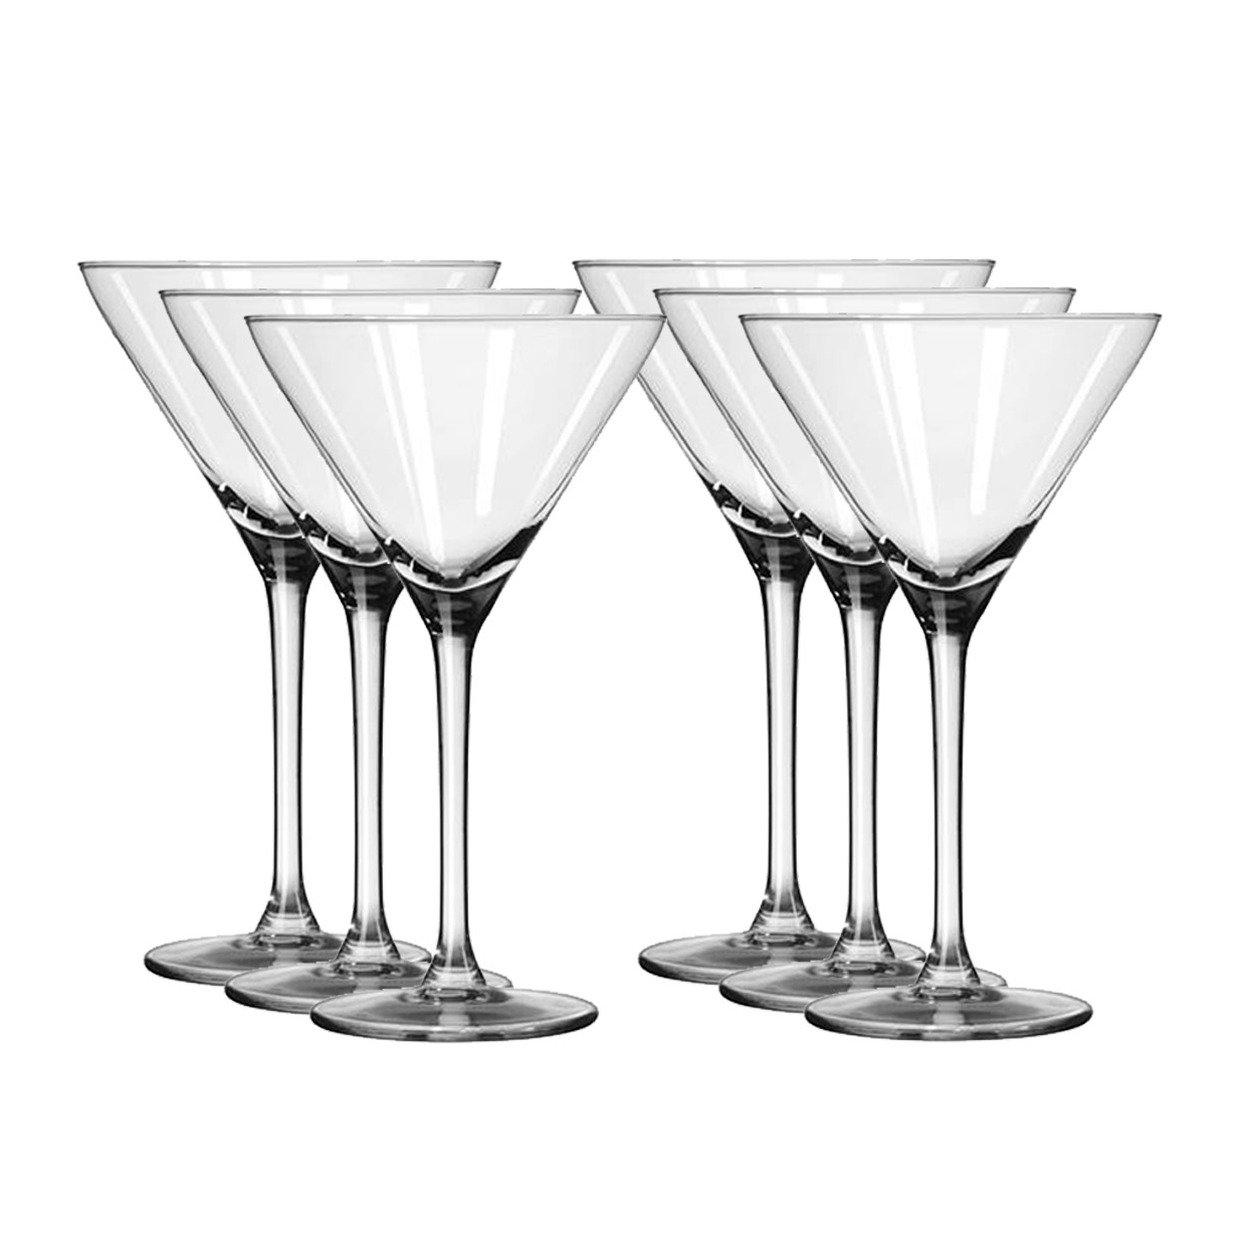 6x Cocktail-Martini glazen 260 ml in luxe doos